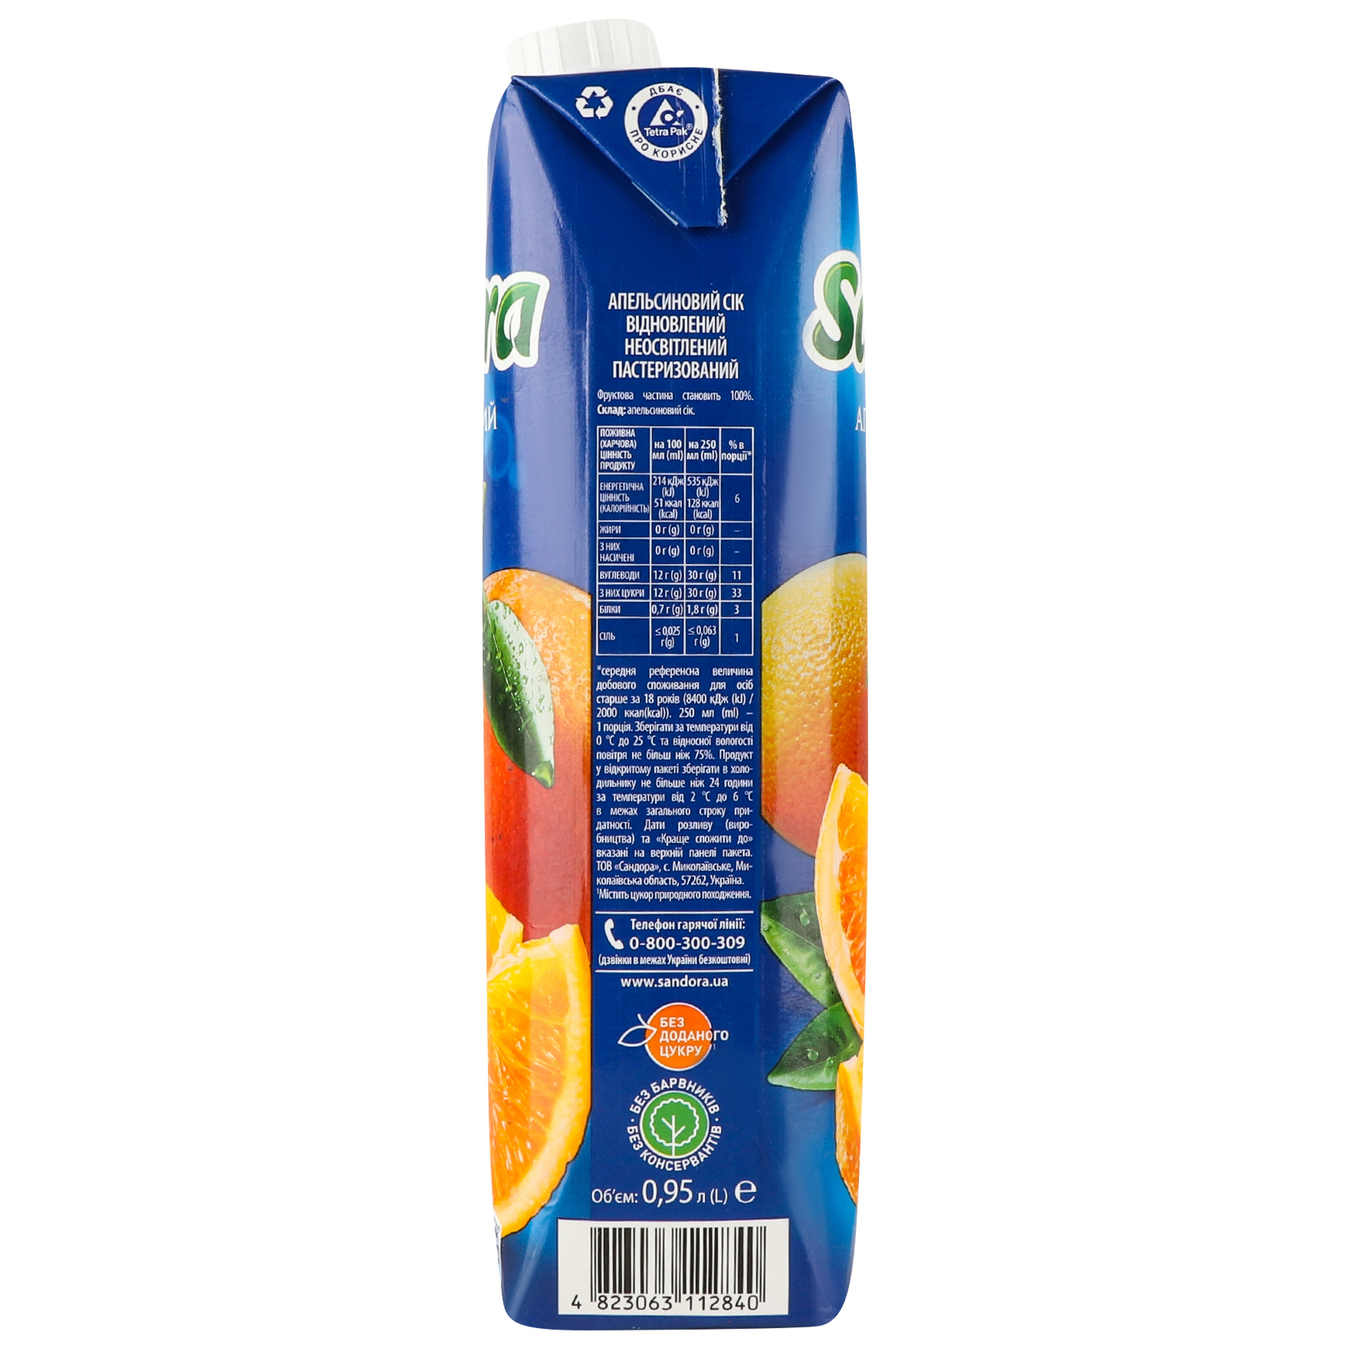 Sandora orange juice 0,95l 5